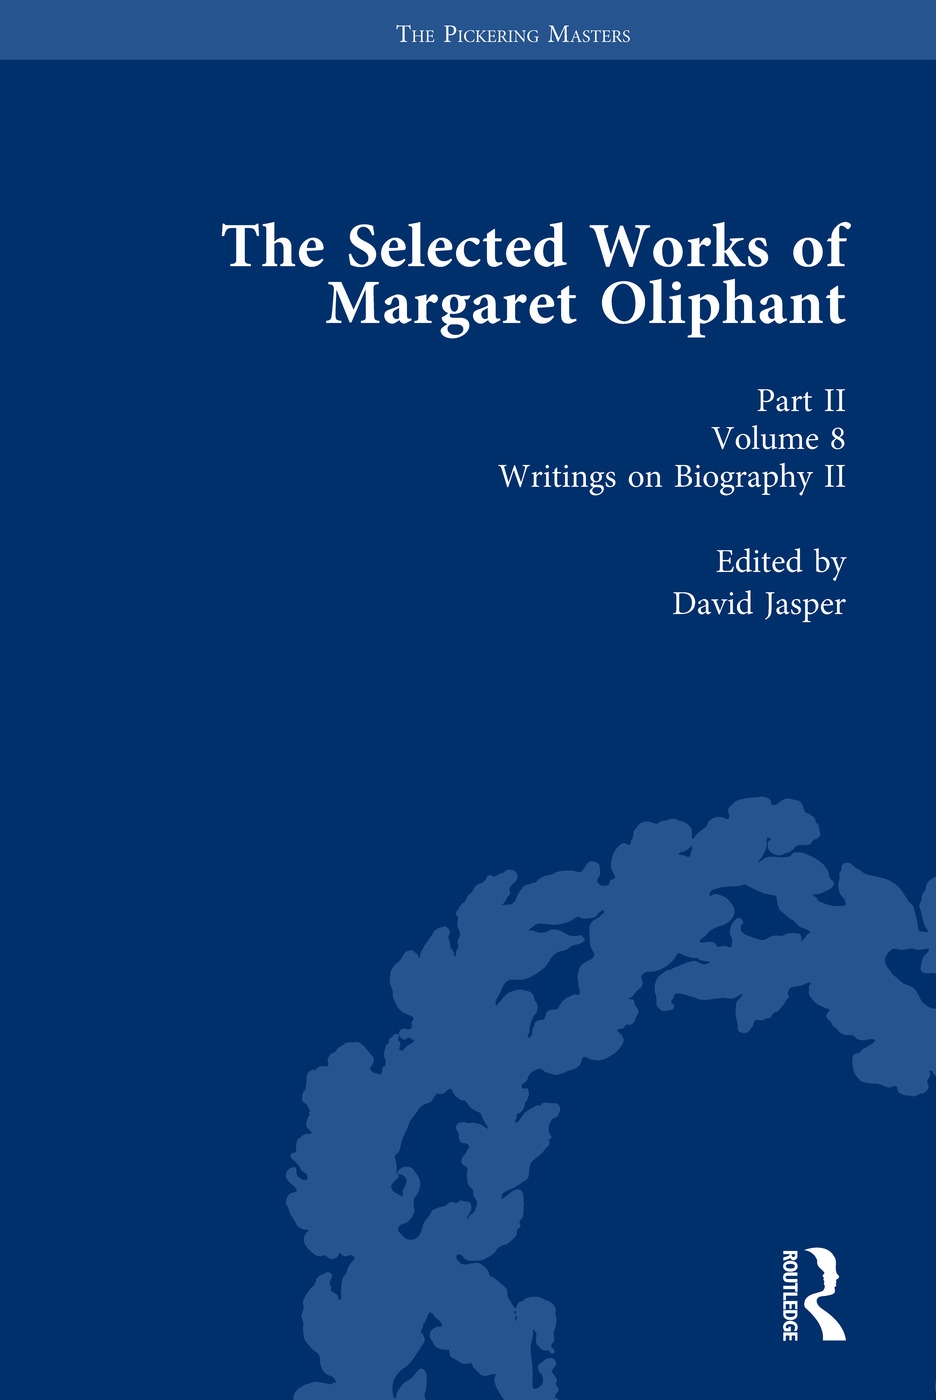 The Selected Works of Margaret Oliphant, Part II Volume 8: Writings on Biography II